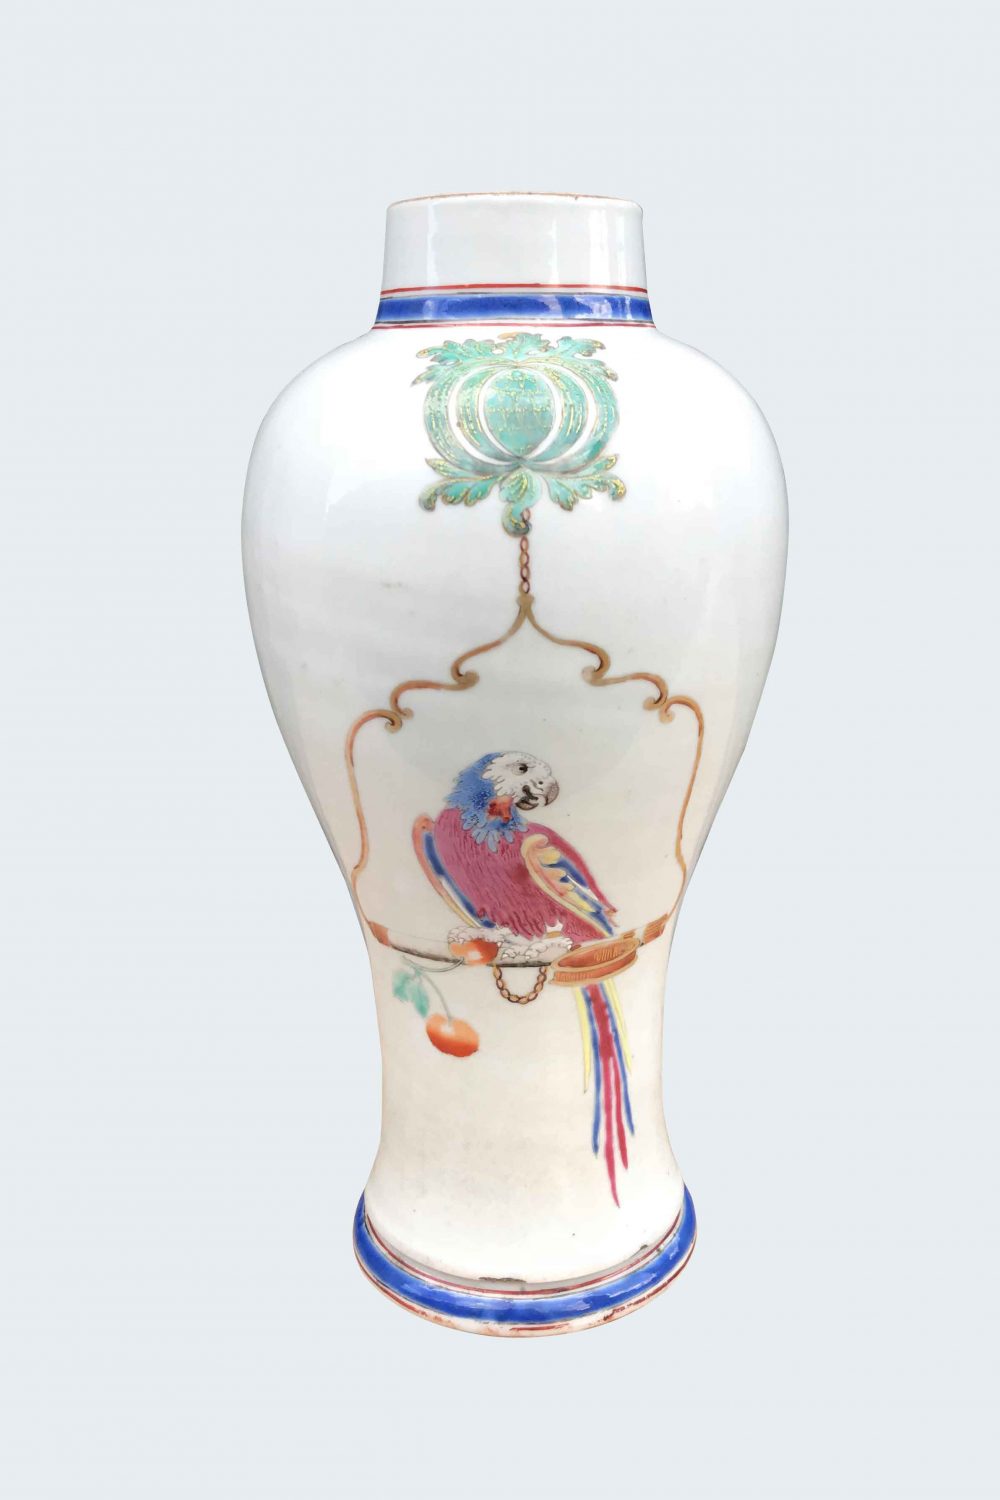 Famille rose Porcelaine Qianlong (1736-1795), circa 1740 , Chine